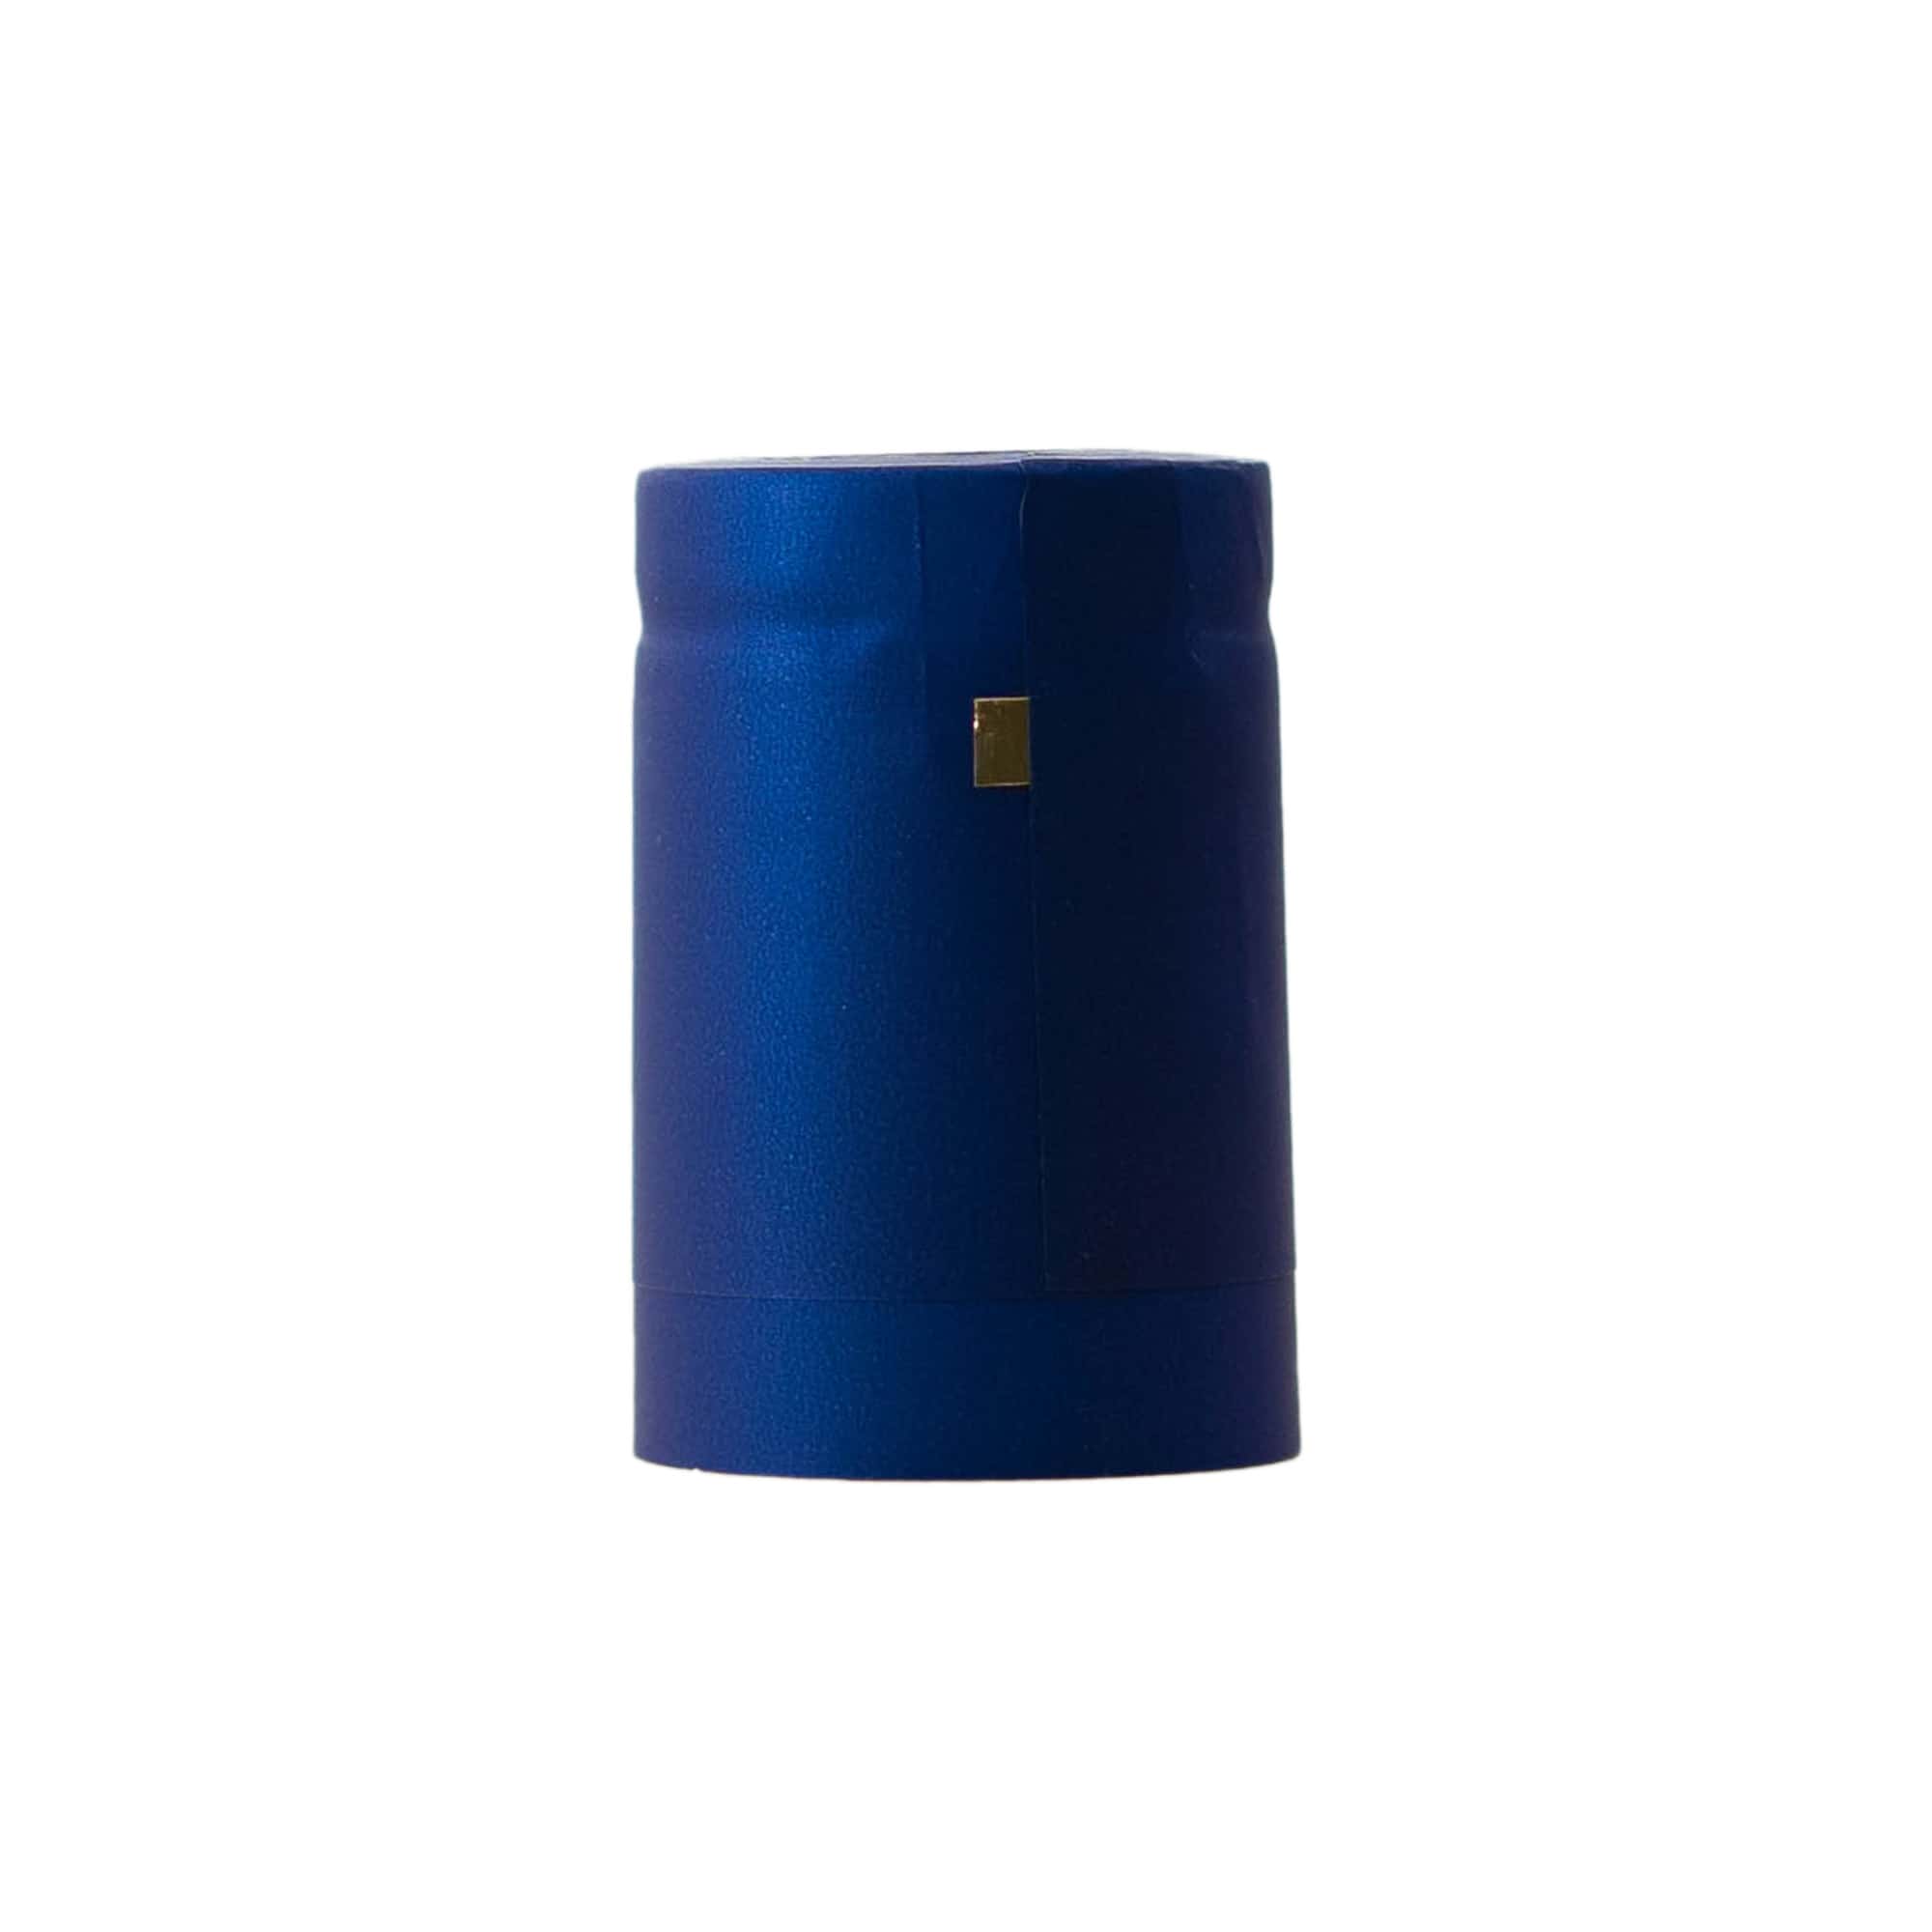 Heat shrink capsule 32x41, PVC plastic, blue